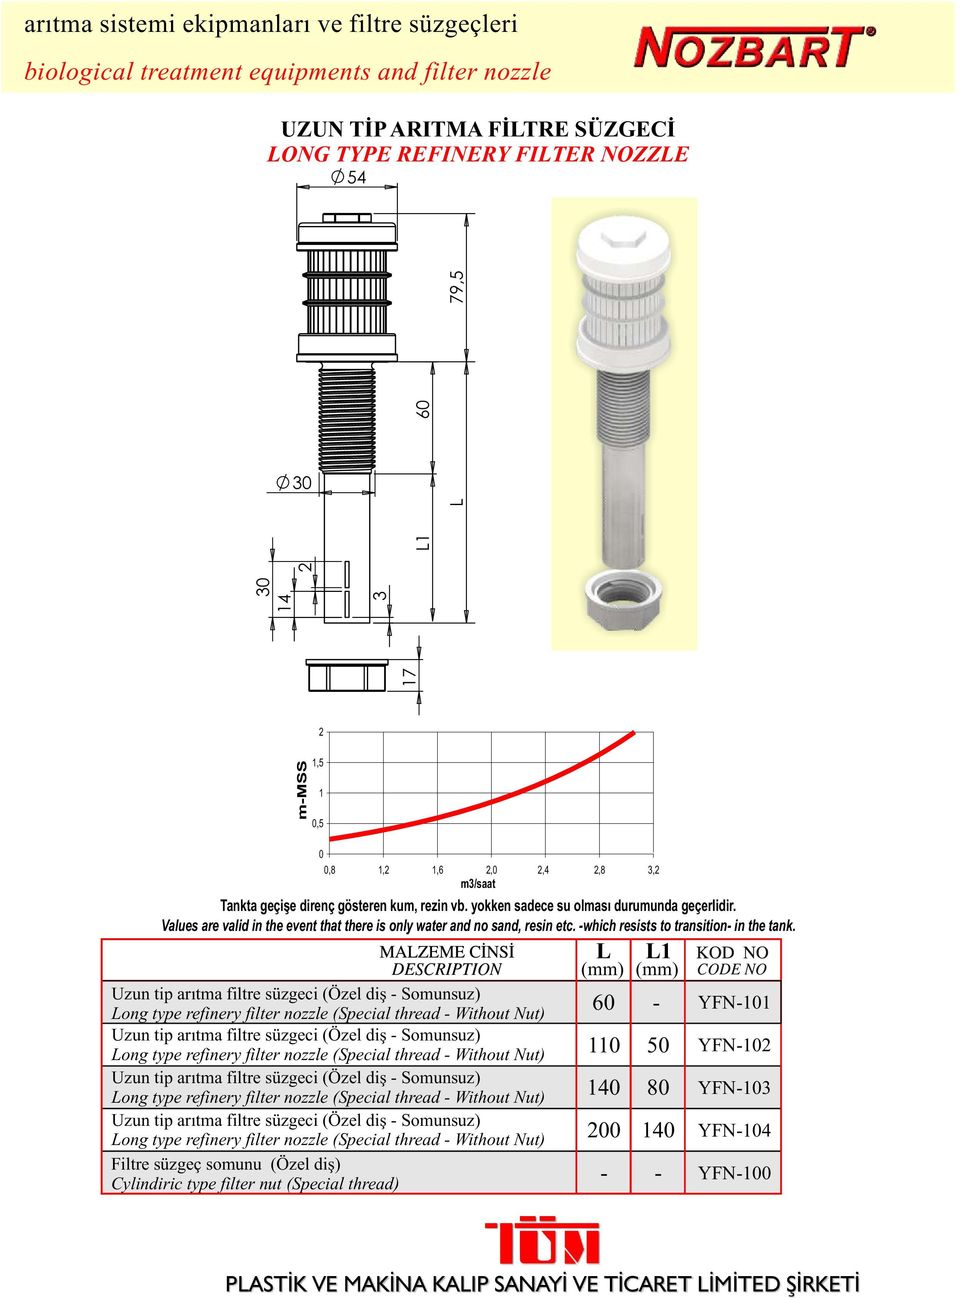 L L1 (mm) (mm) Uzun tip arıtma filtre süzgeci (Özel diş - Somunsuz) YFN-101 Long type refinery filter nozzle (Special thread - Without Nut) Uzun tip arıtma filtre süzgeci (Özel diş - Somunsuz) Long